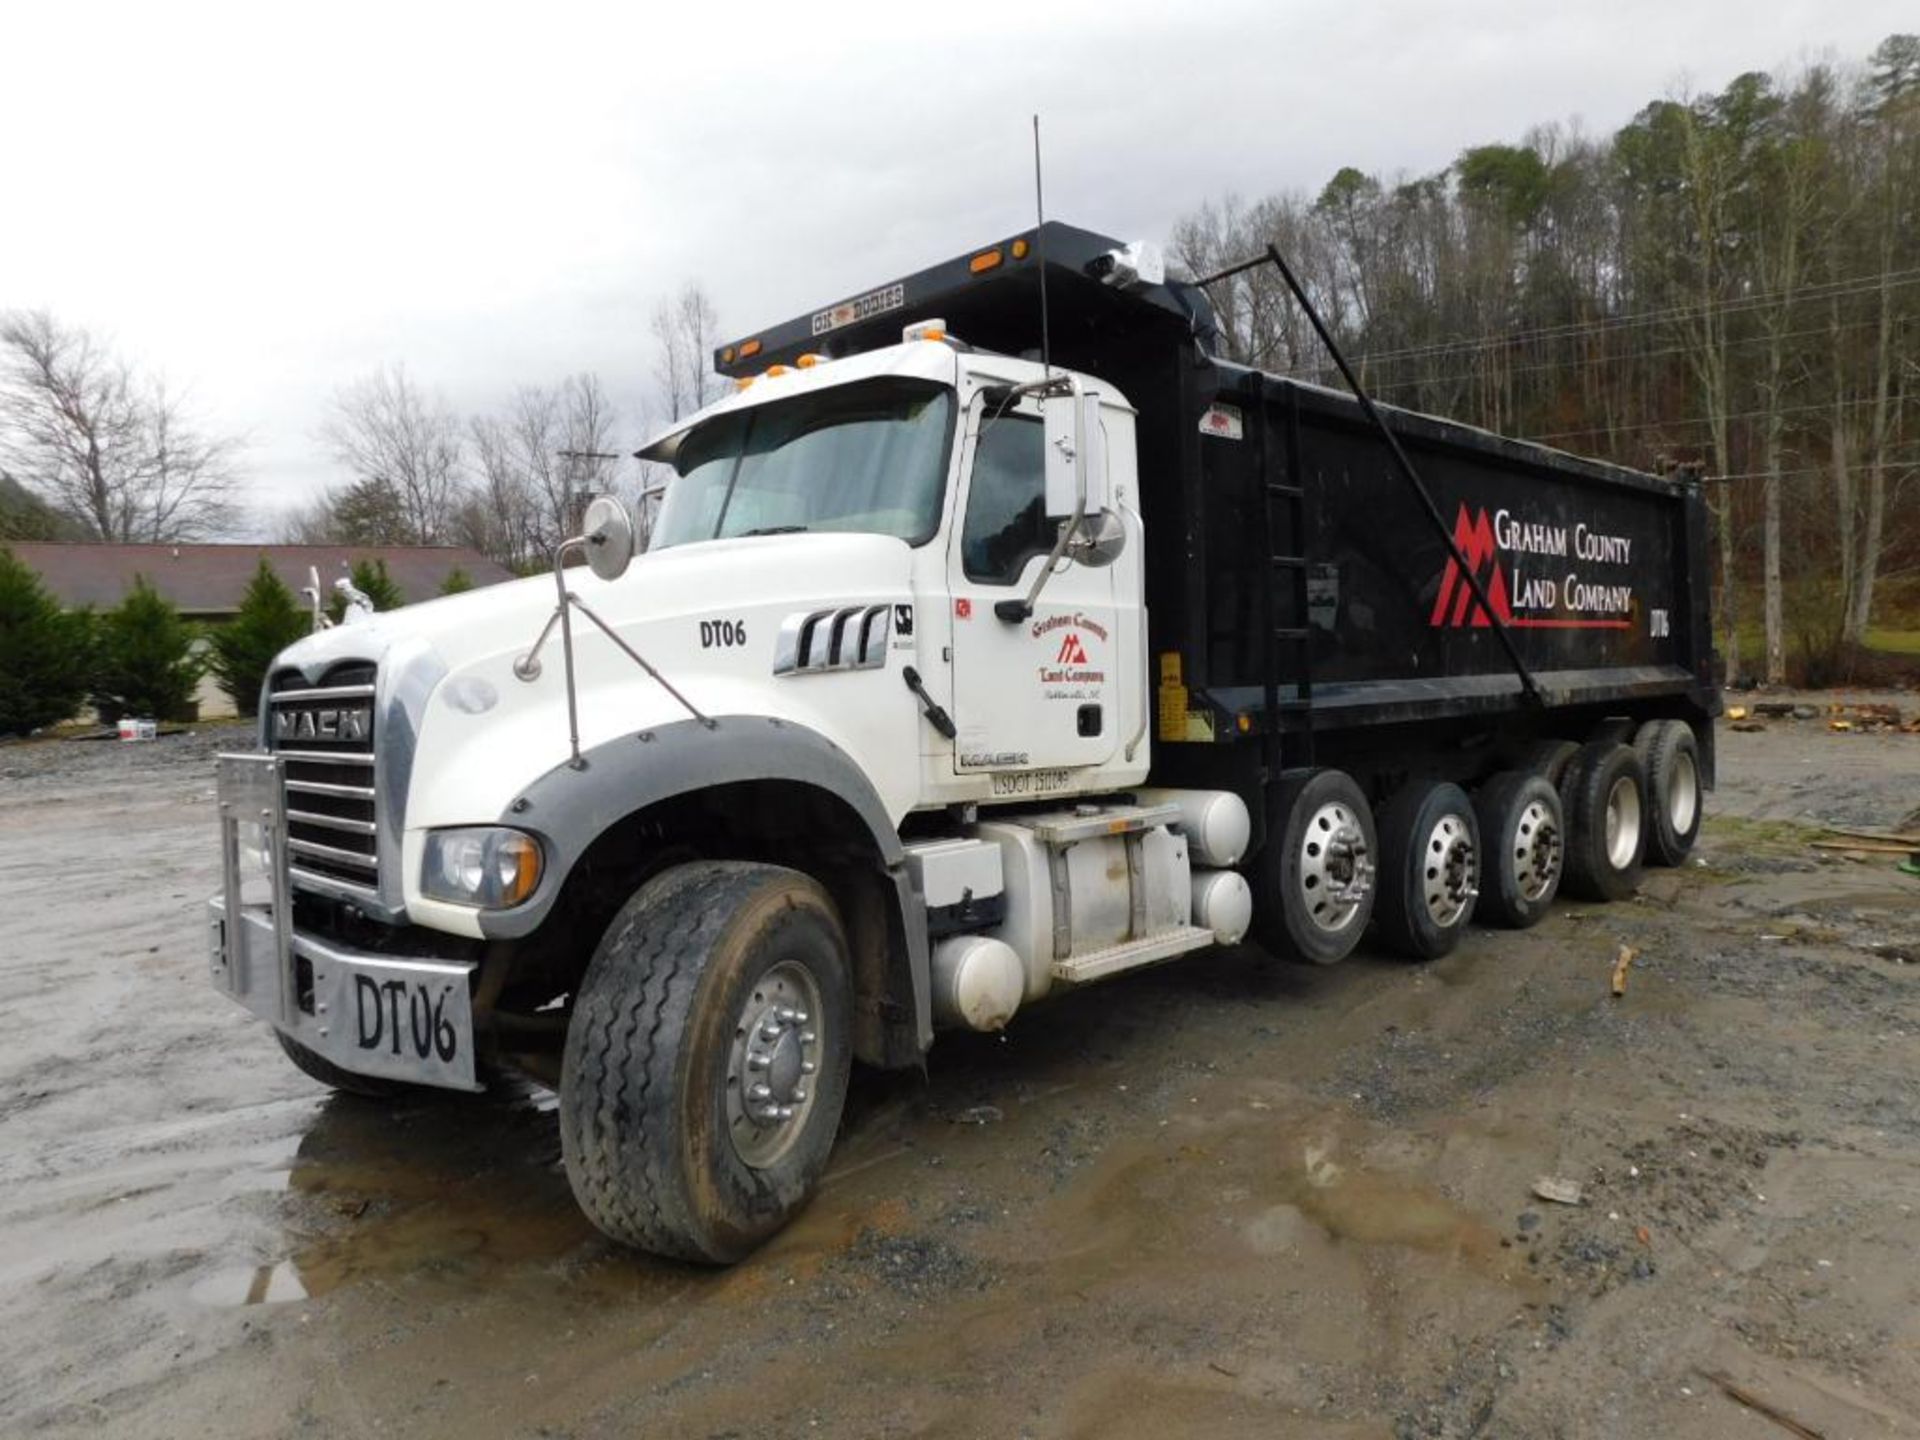 2017 Mack GV713 Quint-Axle Dump Truck, VIN 1M2AX07C7HMO33546, 289,436 Miles Indicated, DT06 - Image 2 of 9